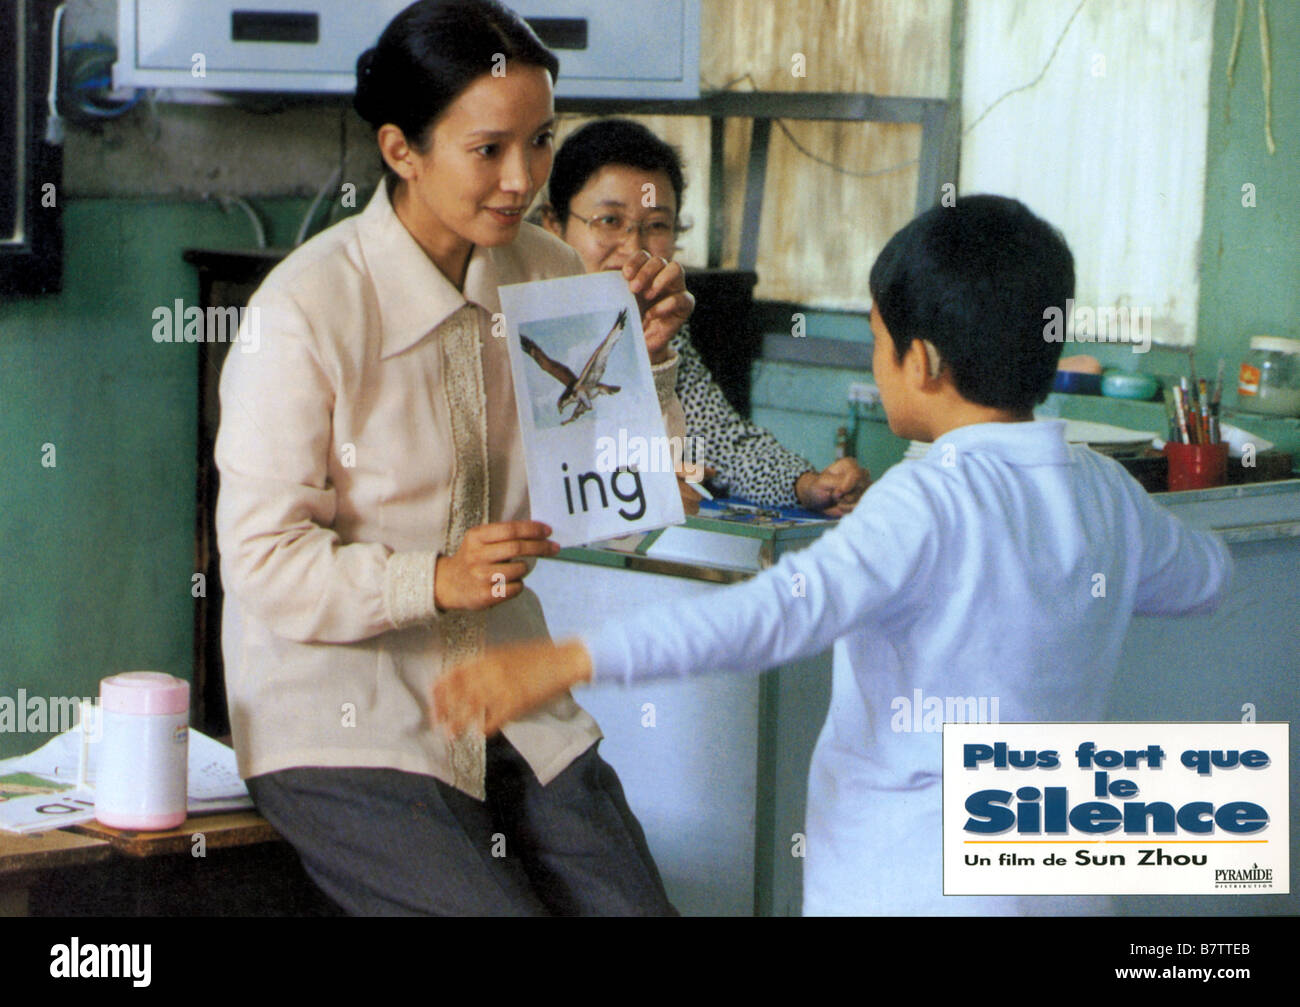 Plus fort que le silence Piao liang Ma Ma Jahr: 1999 - China Gong Li Regie: Zhou Sun Stockfoto